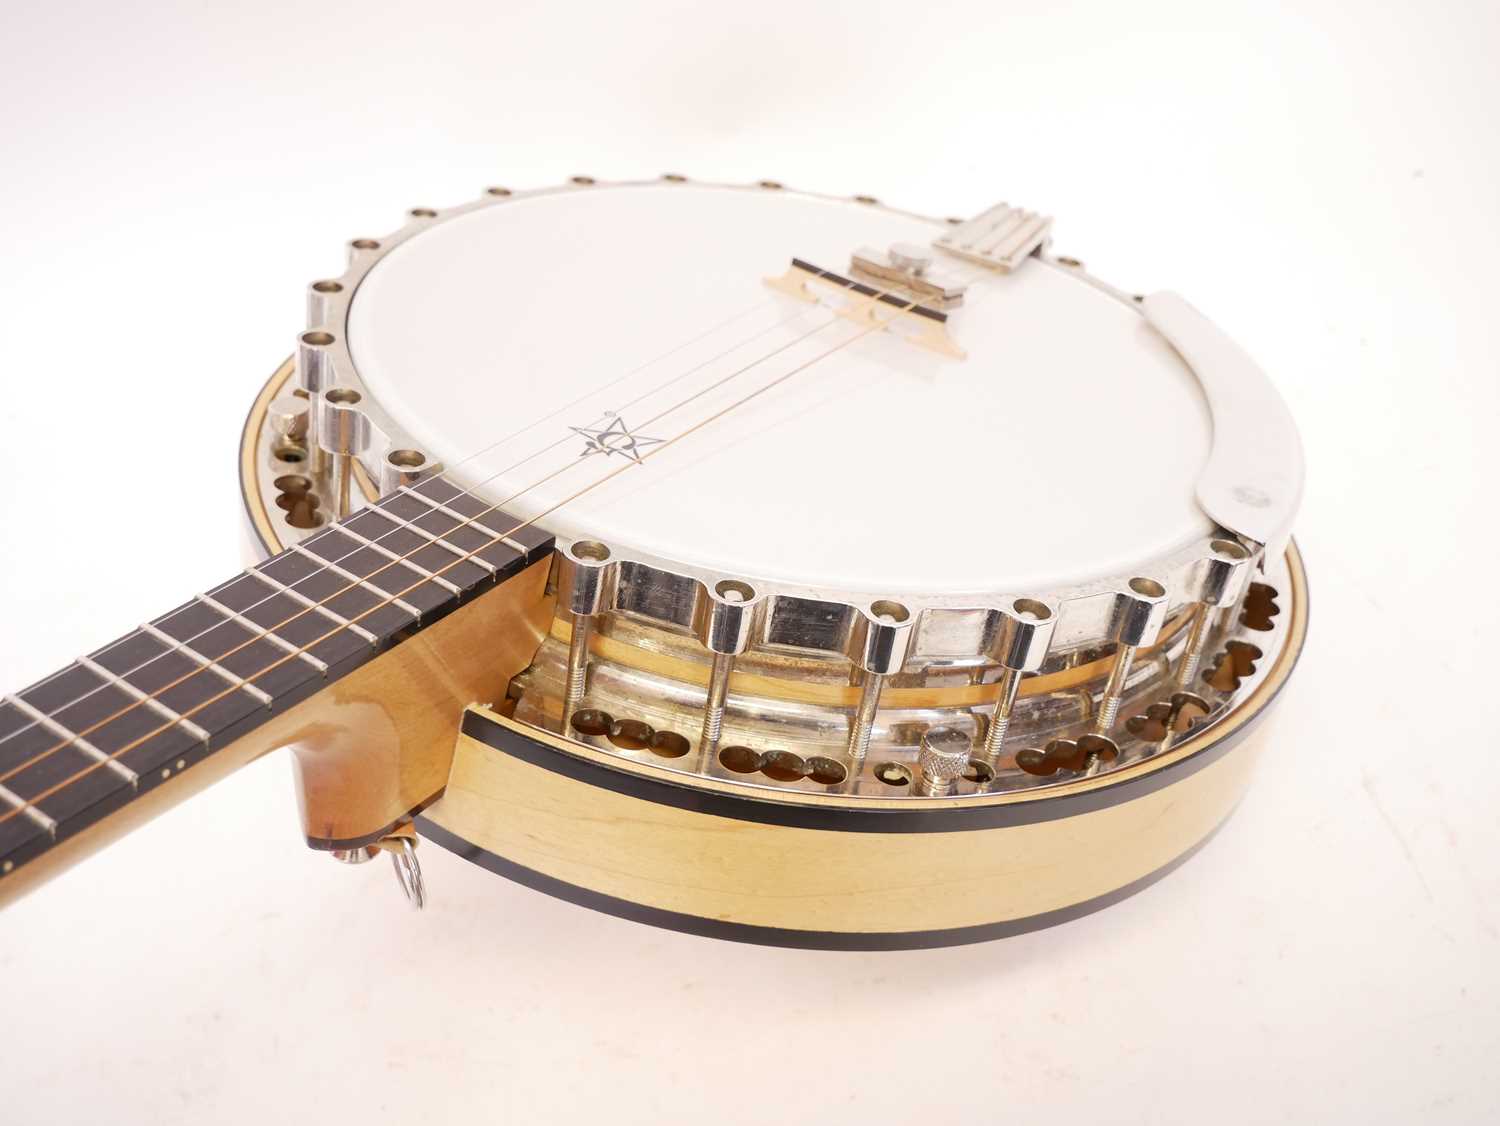 Knight tenor banjo - Image 2 of 9